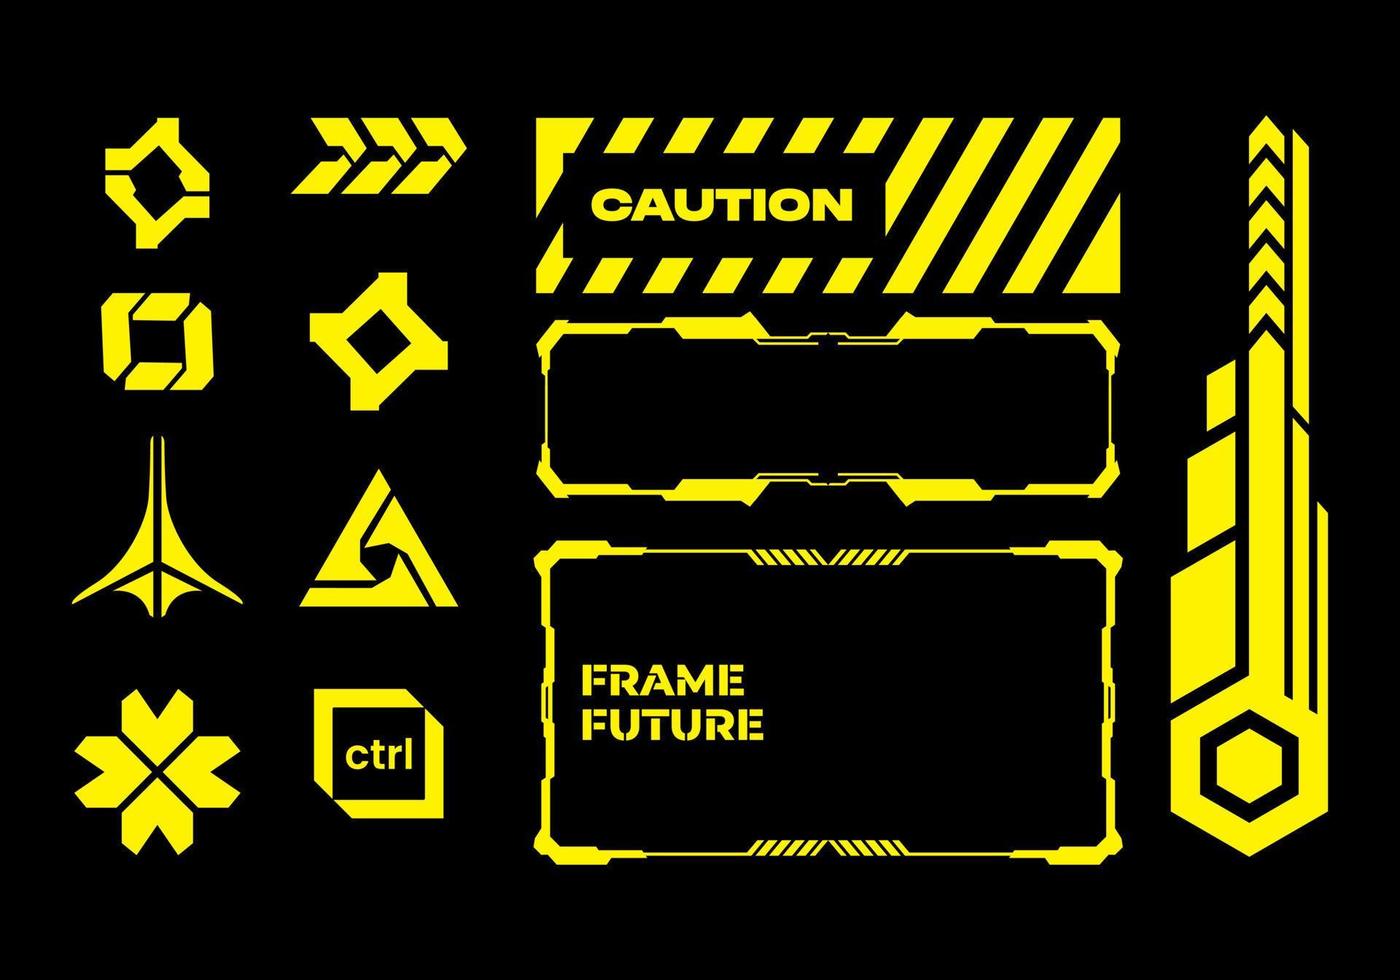 hud futurista marco frontera elementos paquete precaución amarillo línea ciber ciencia ficción, icono símbolo cyberpunk vector